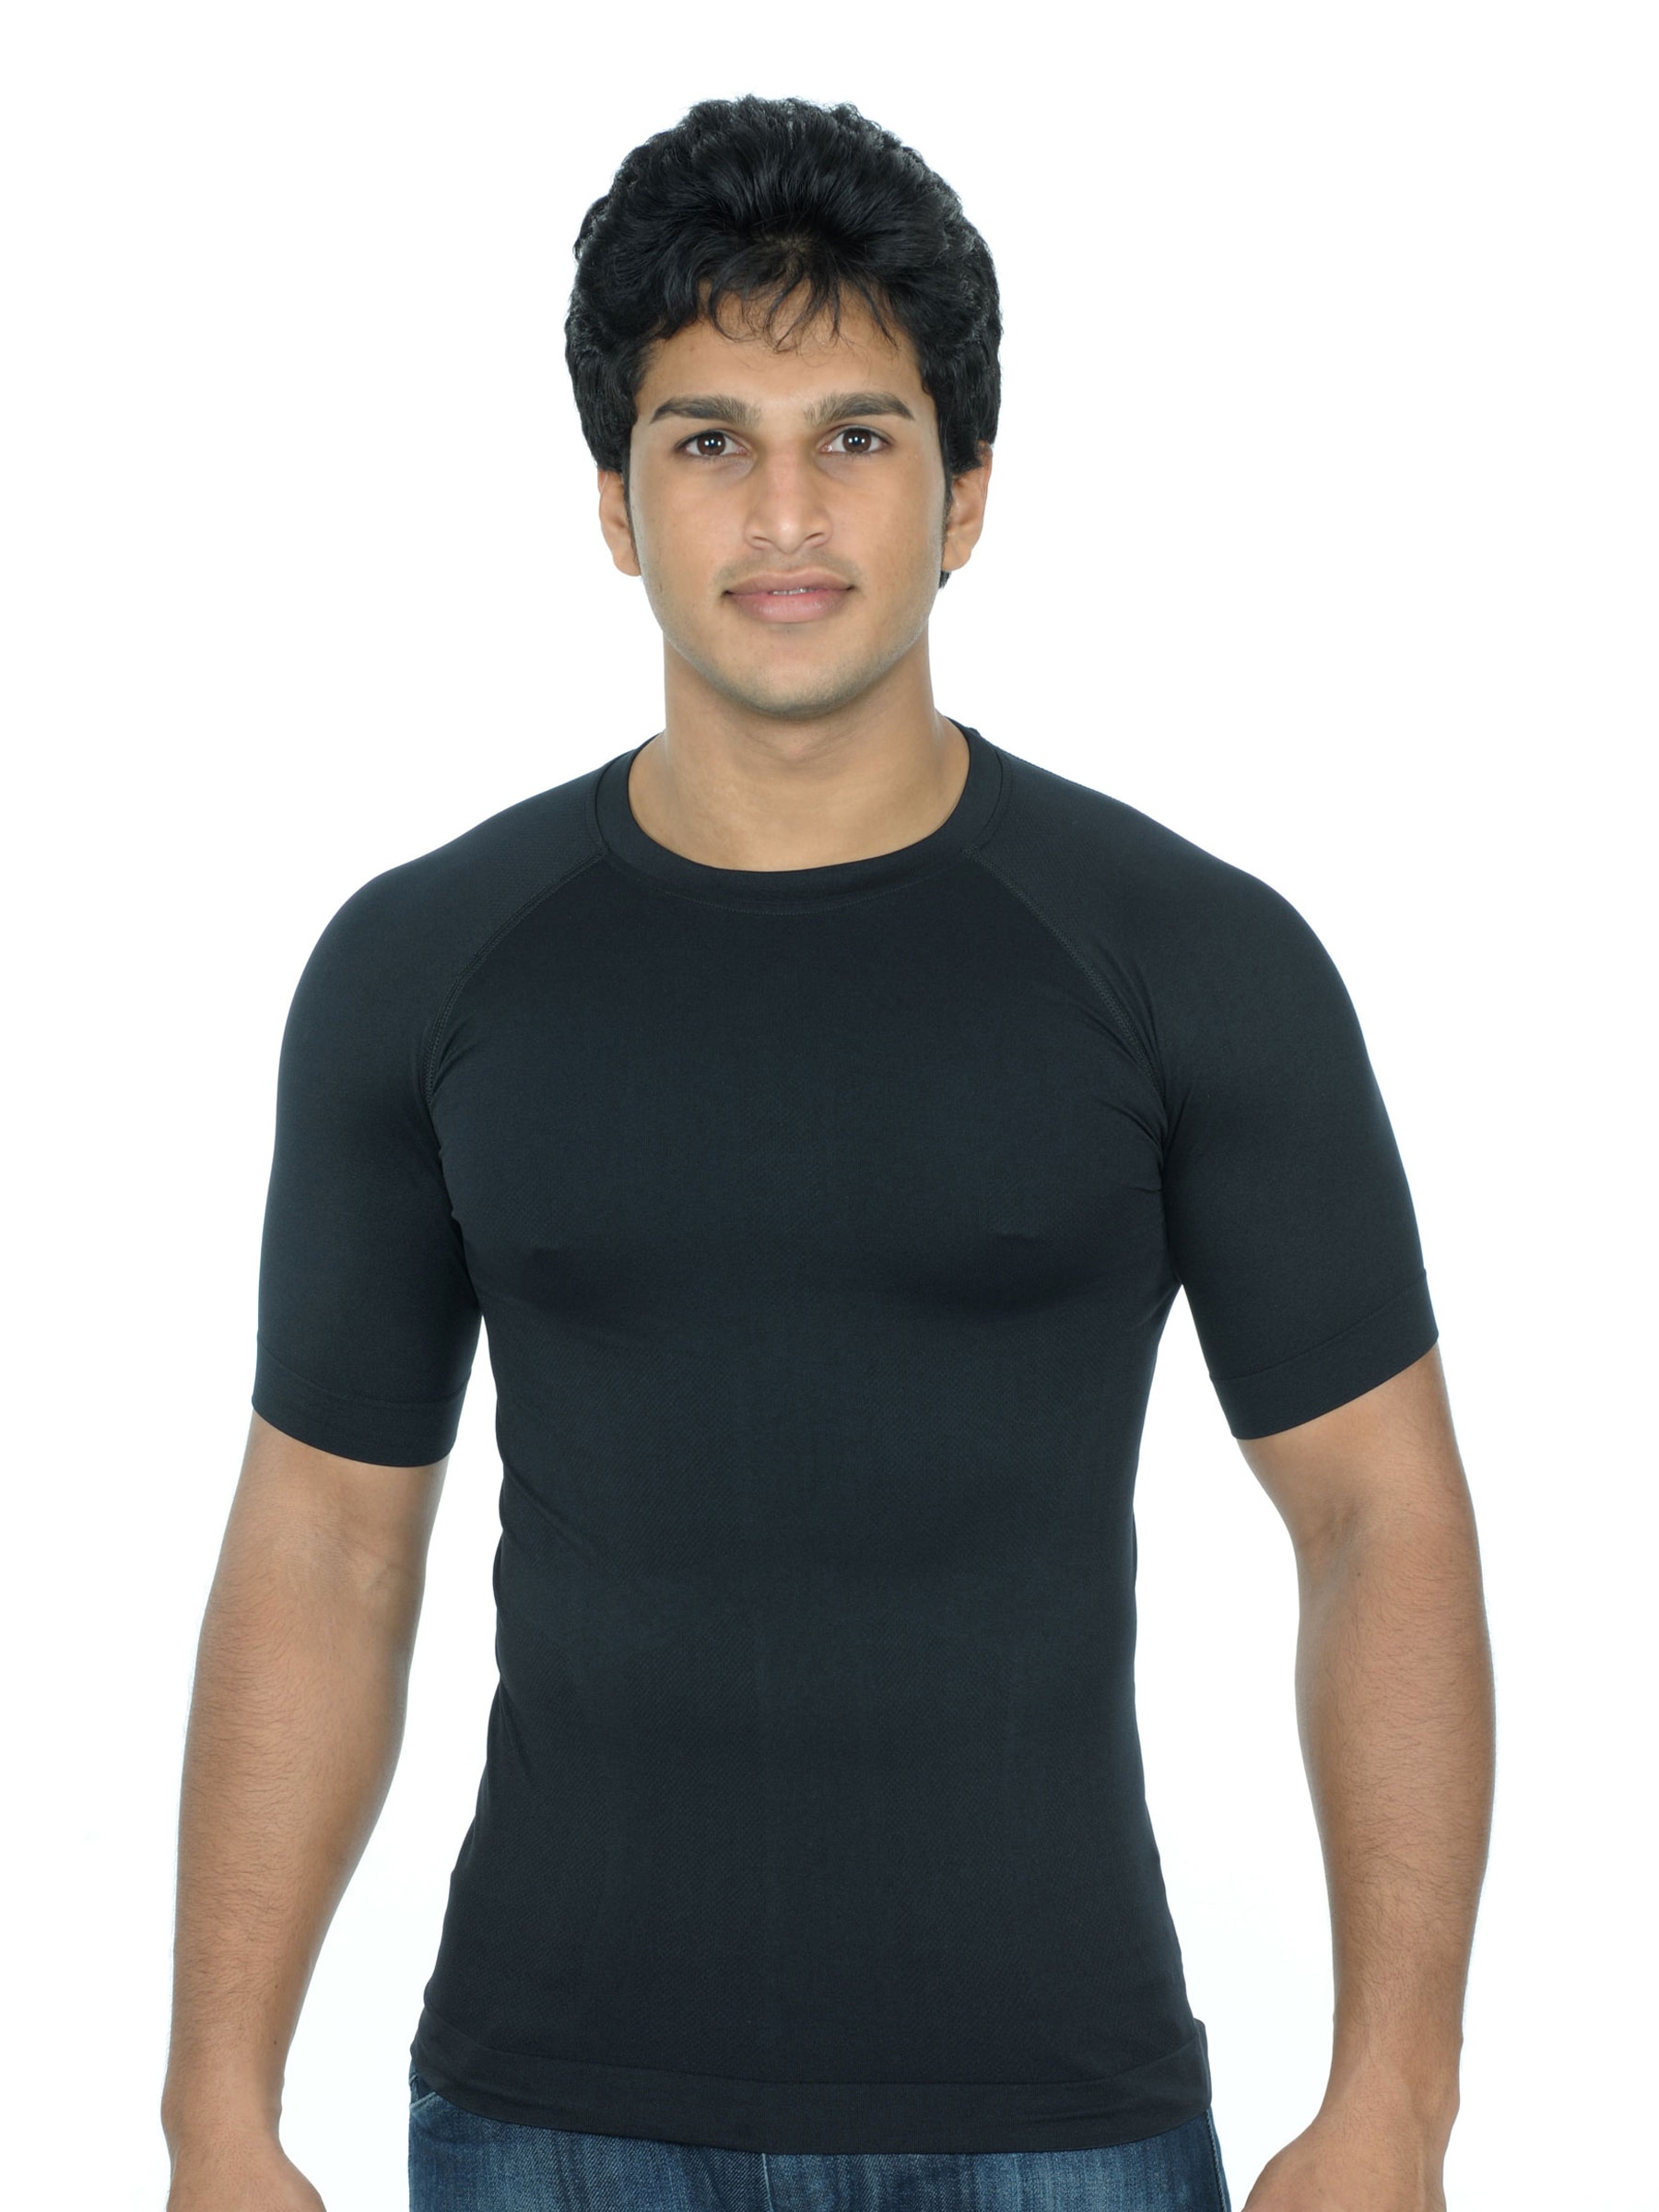 Decathlon Men's Comp Black T-shirt